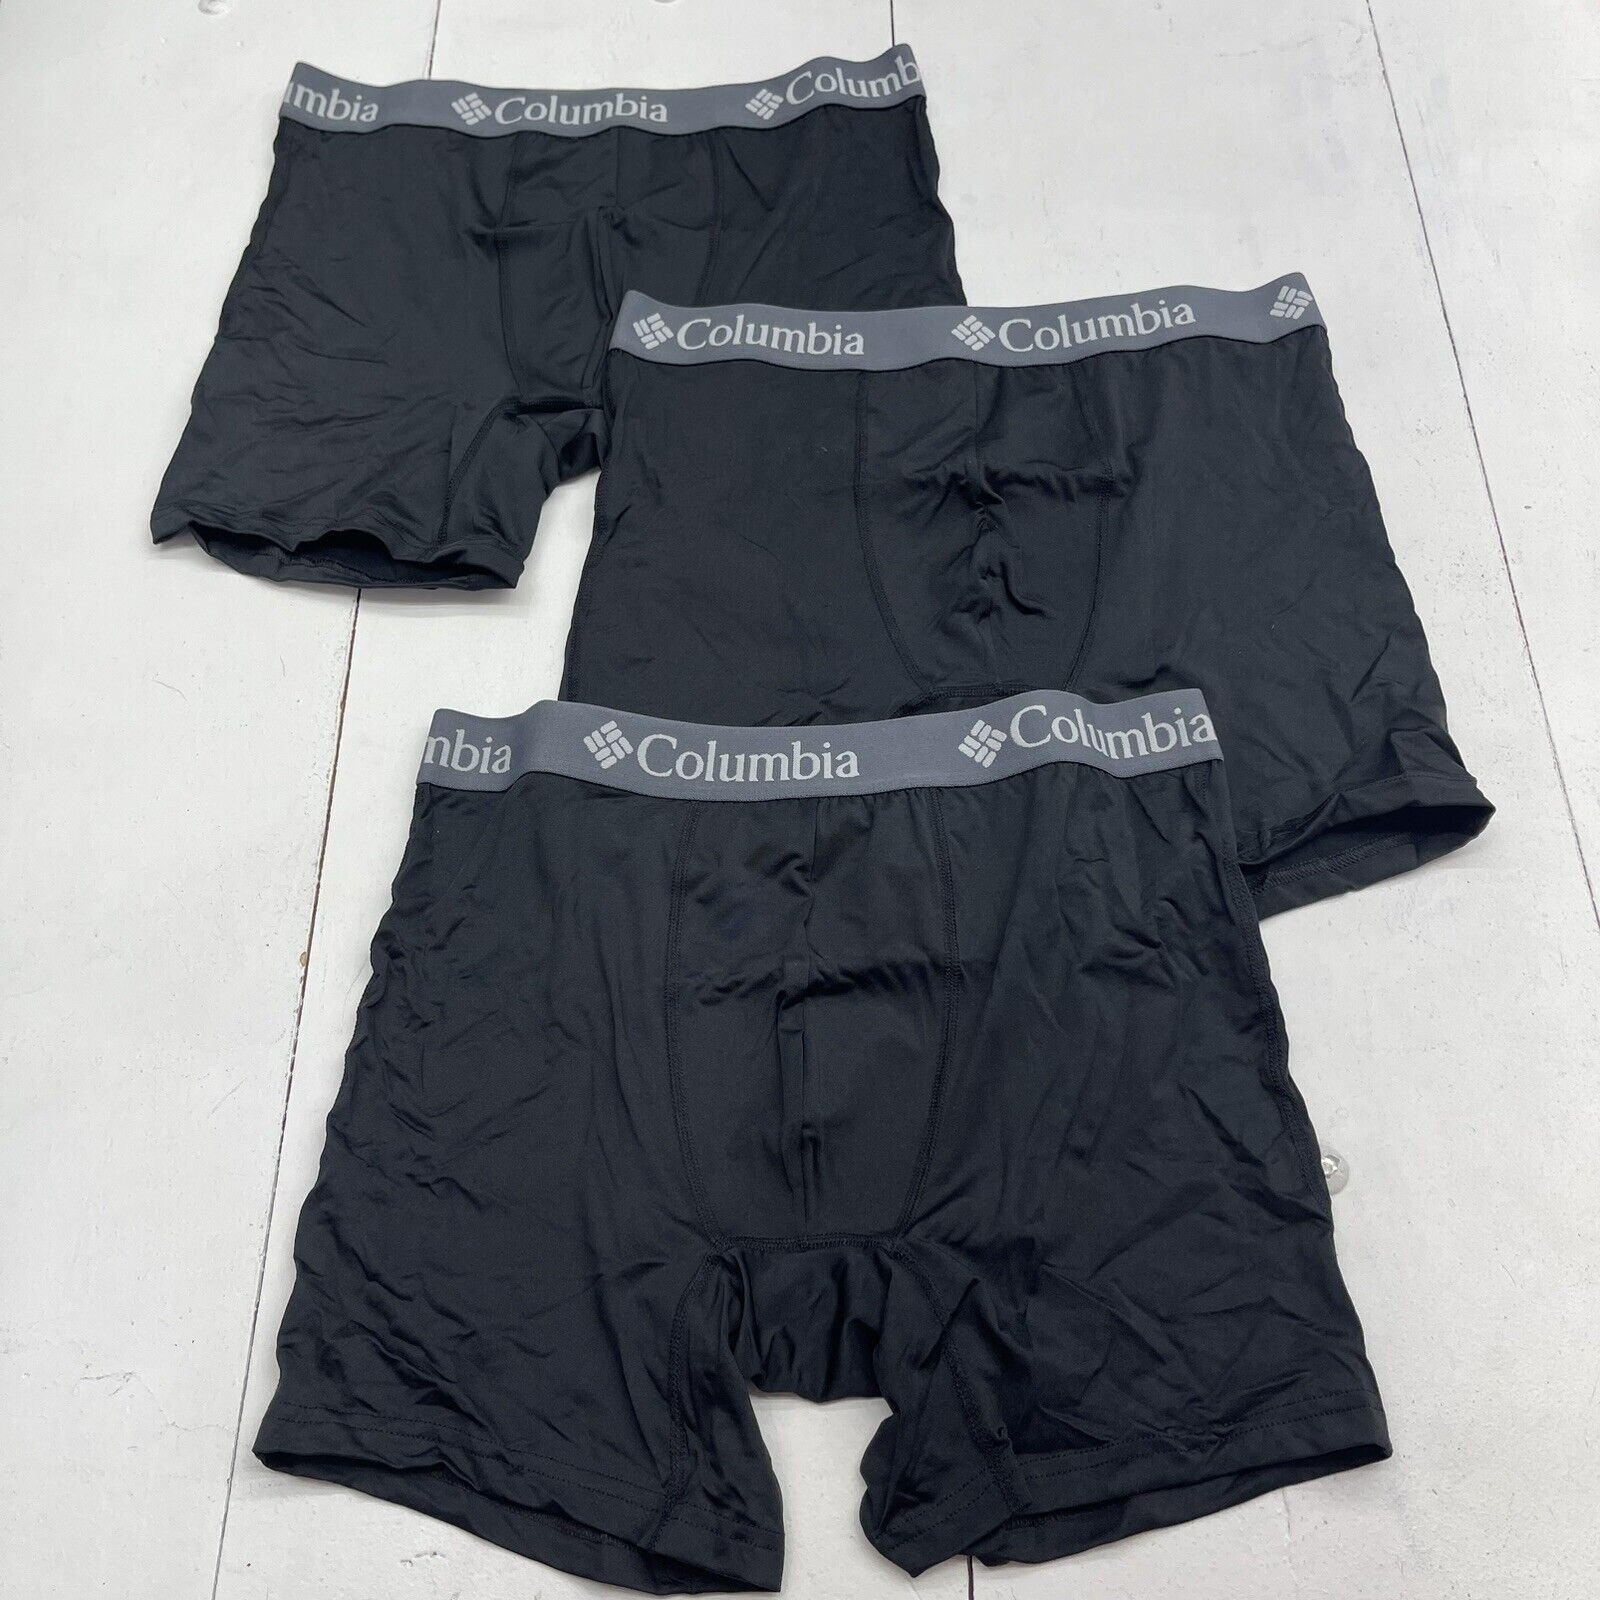 Calvin Klein Black 3 Pack Boxer Briefs Men's Size Large NEW - beyond  exchange